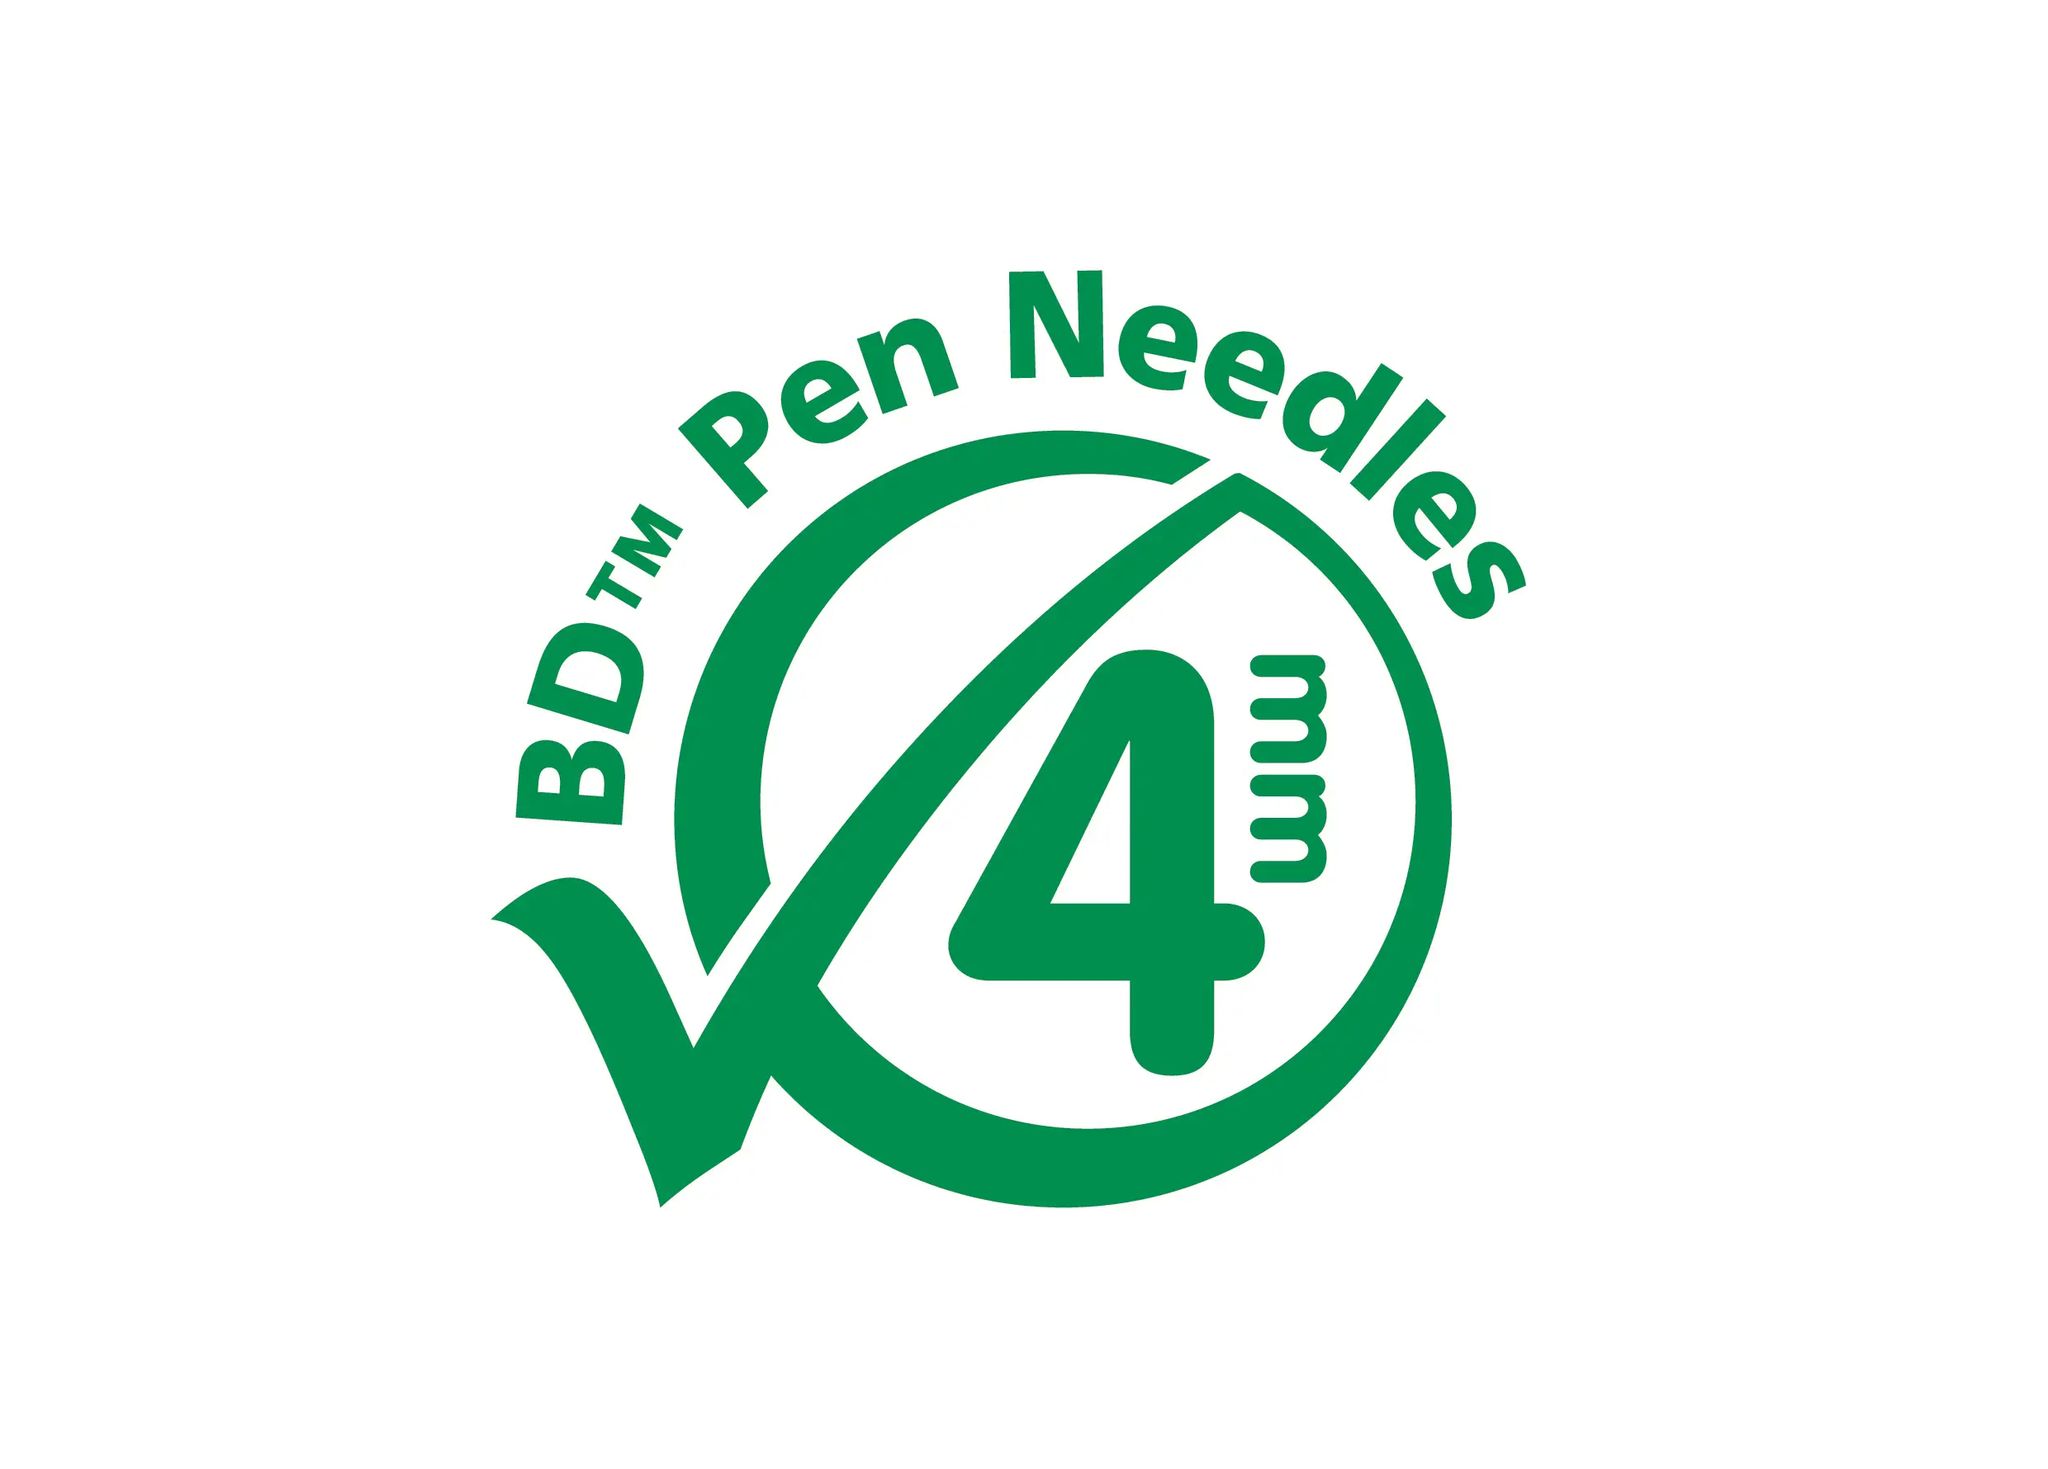 Bd Micro Fine Pen Needles Easy Flow 4Mm 100 Pcs